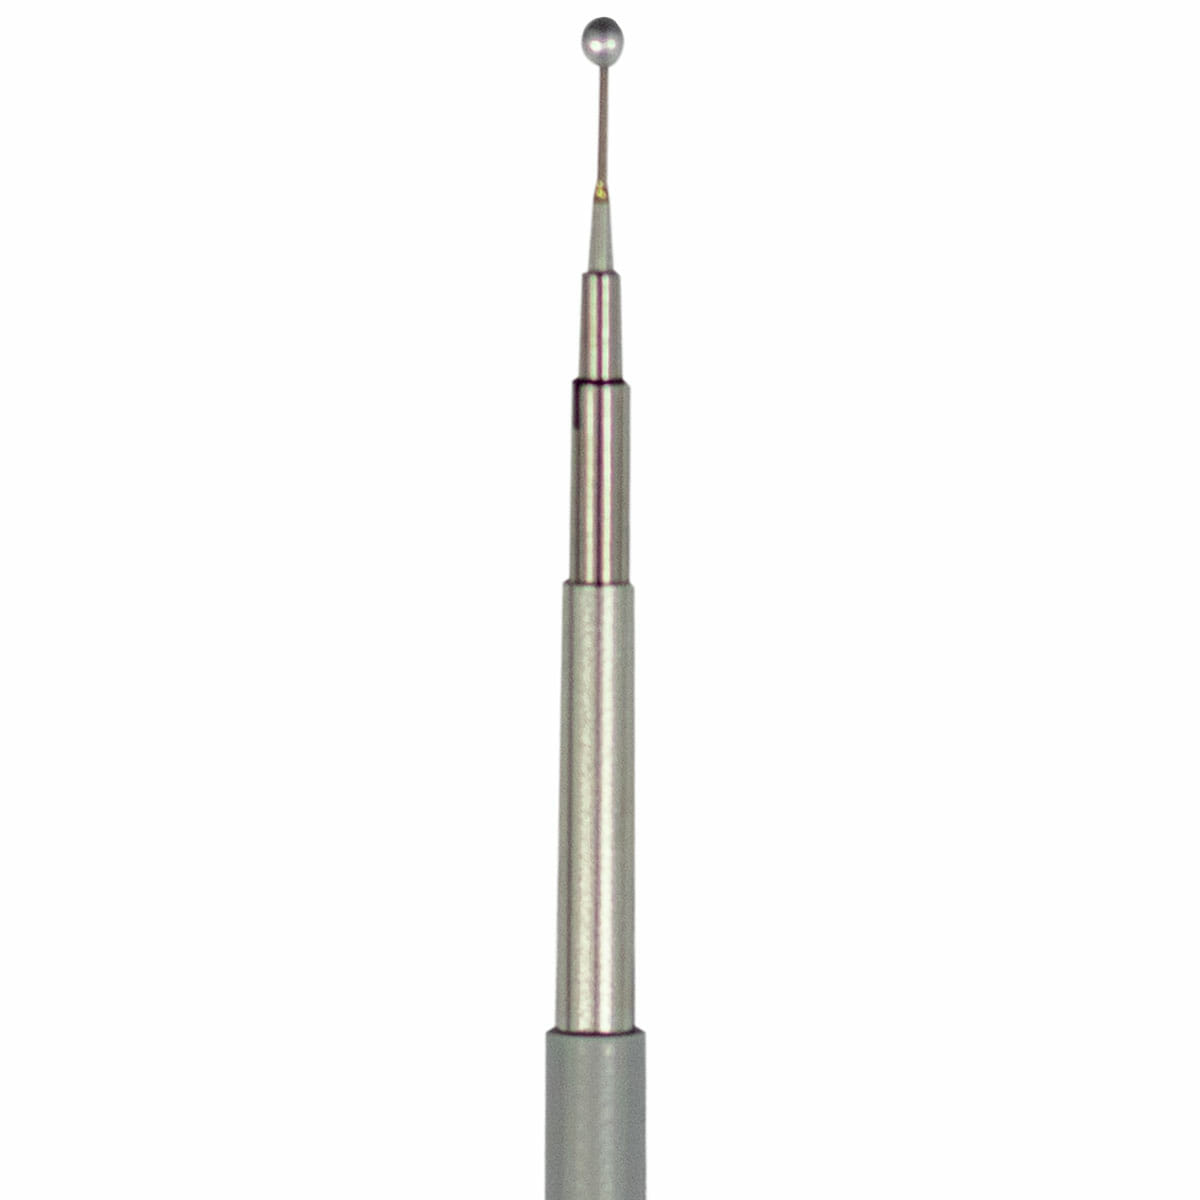 Kanomax Climomaster Anemometer Probe - Model 6551-2G